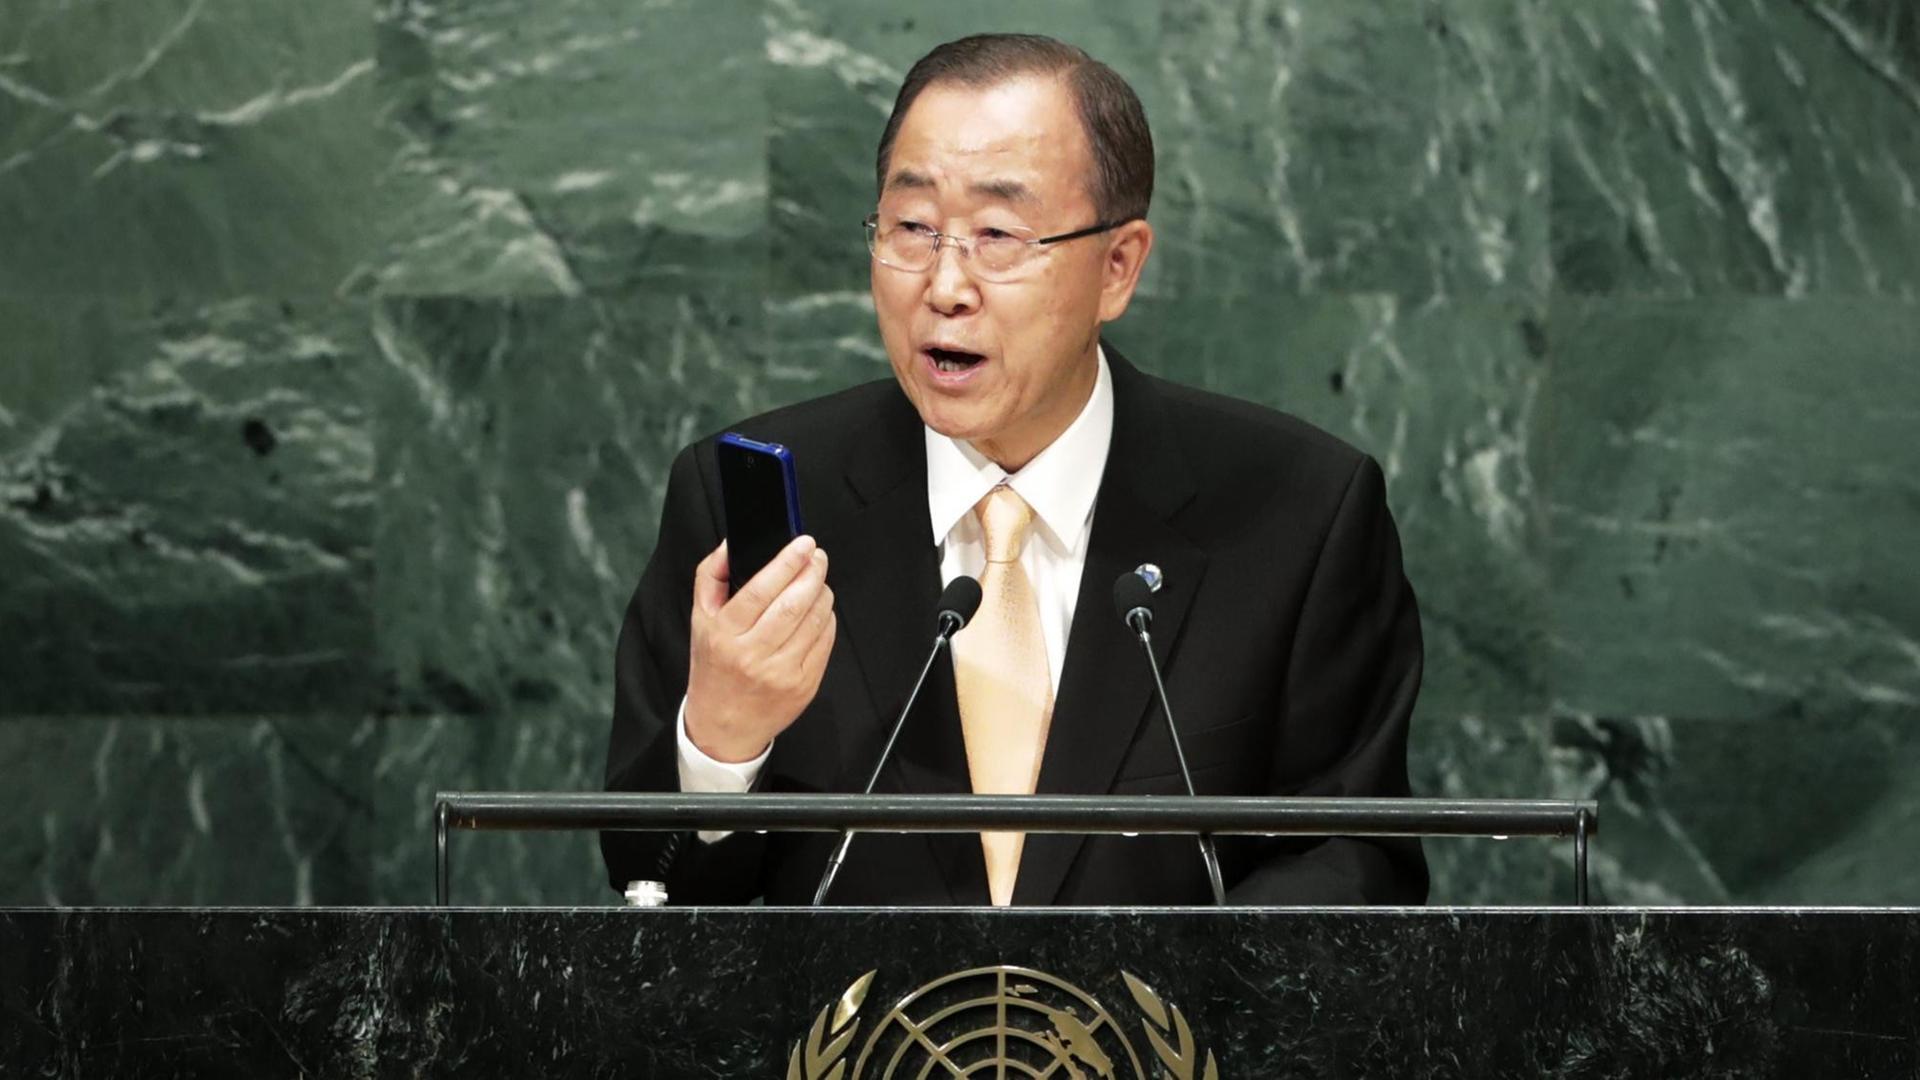 Ban Ki-moon redet am Pult im Weltsaal des UNO-Hauptquartiers in New York.